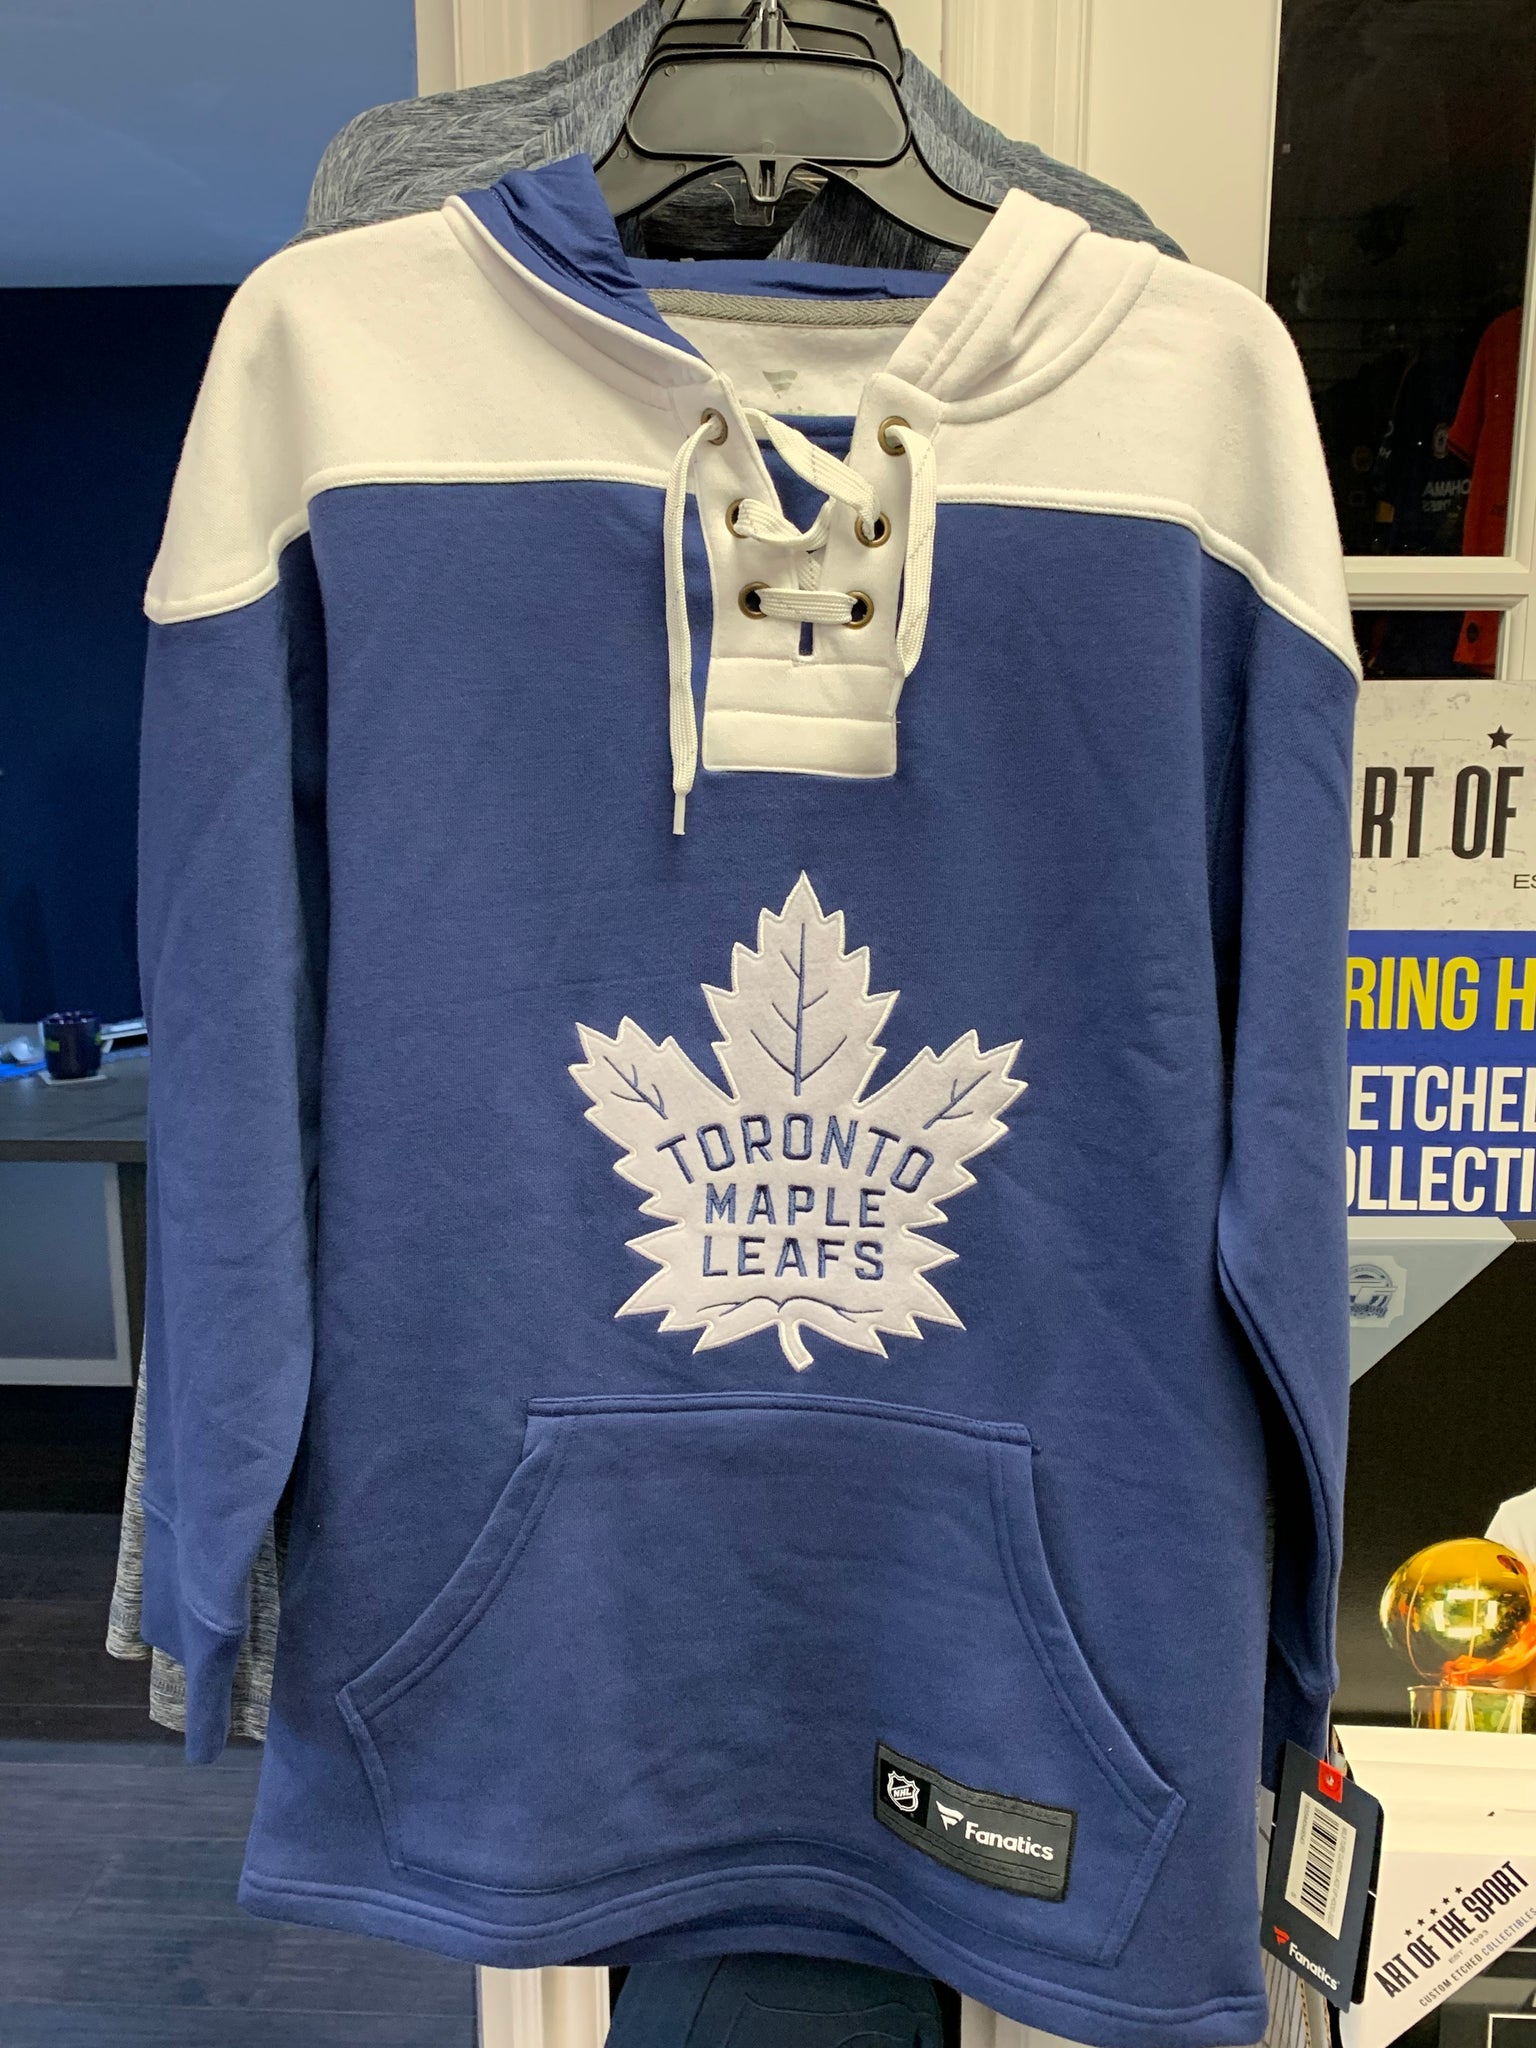 Fanatics Branded Men's Fanatics Branded Blue/White Toronto Maple